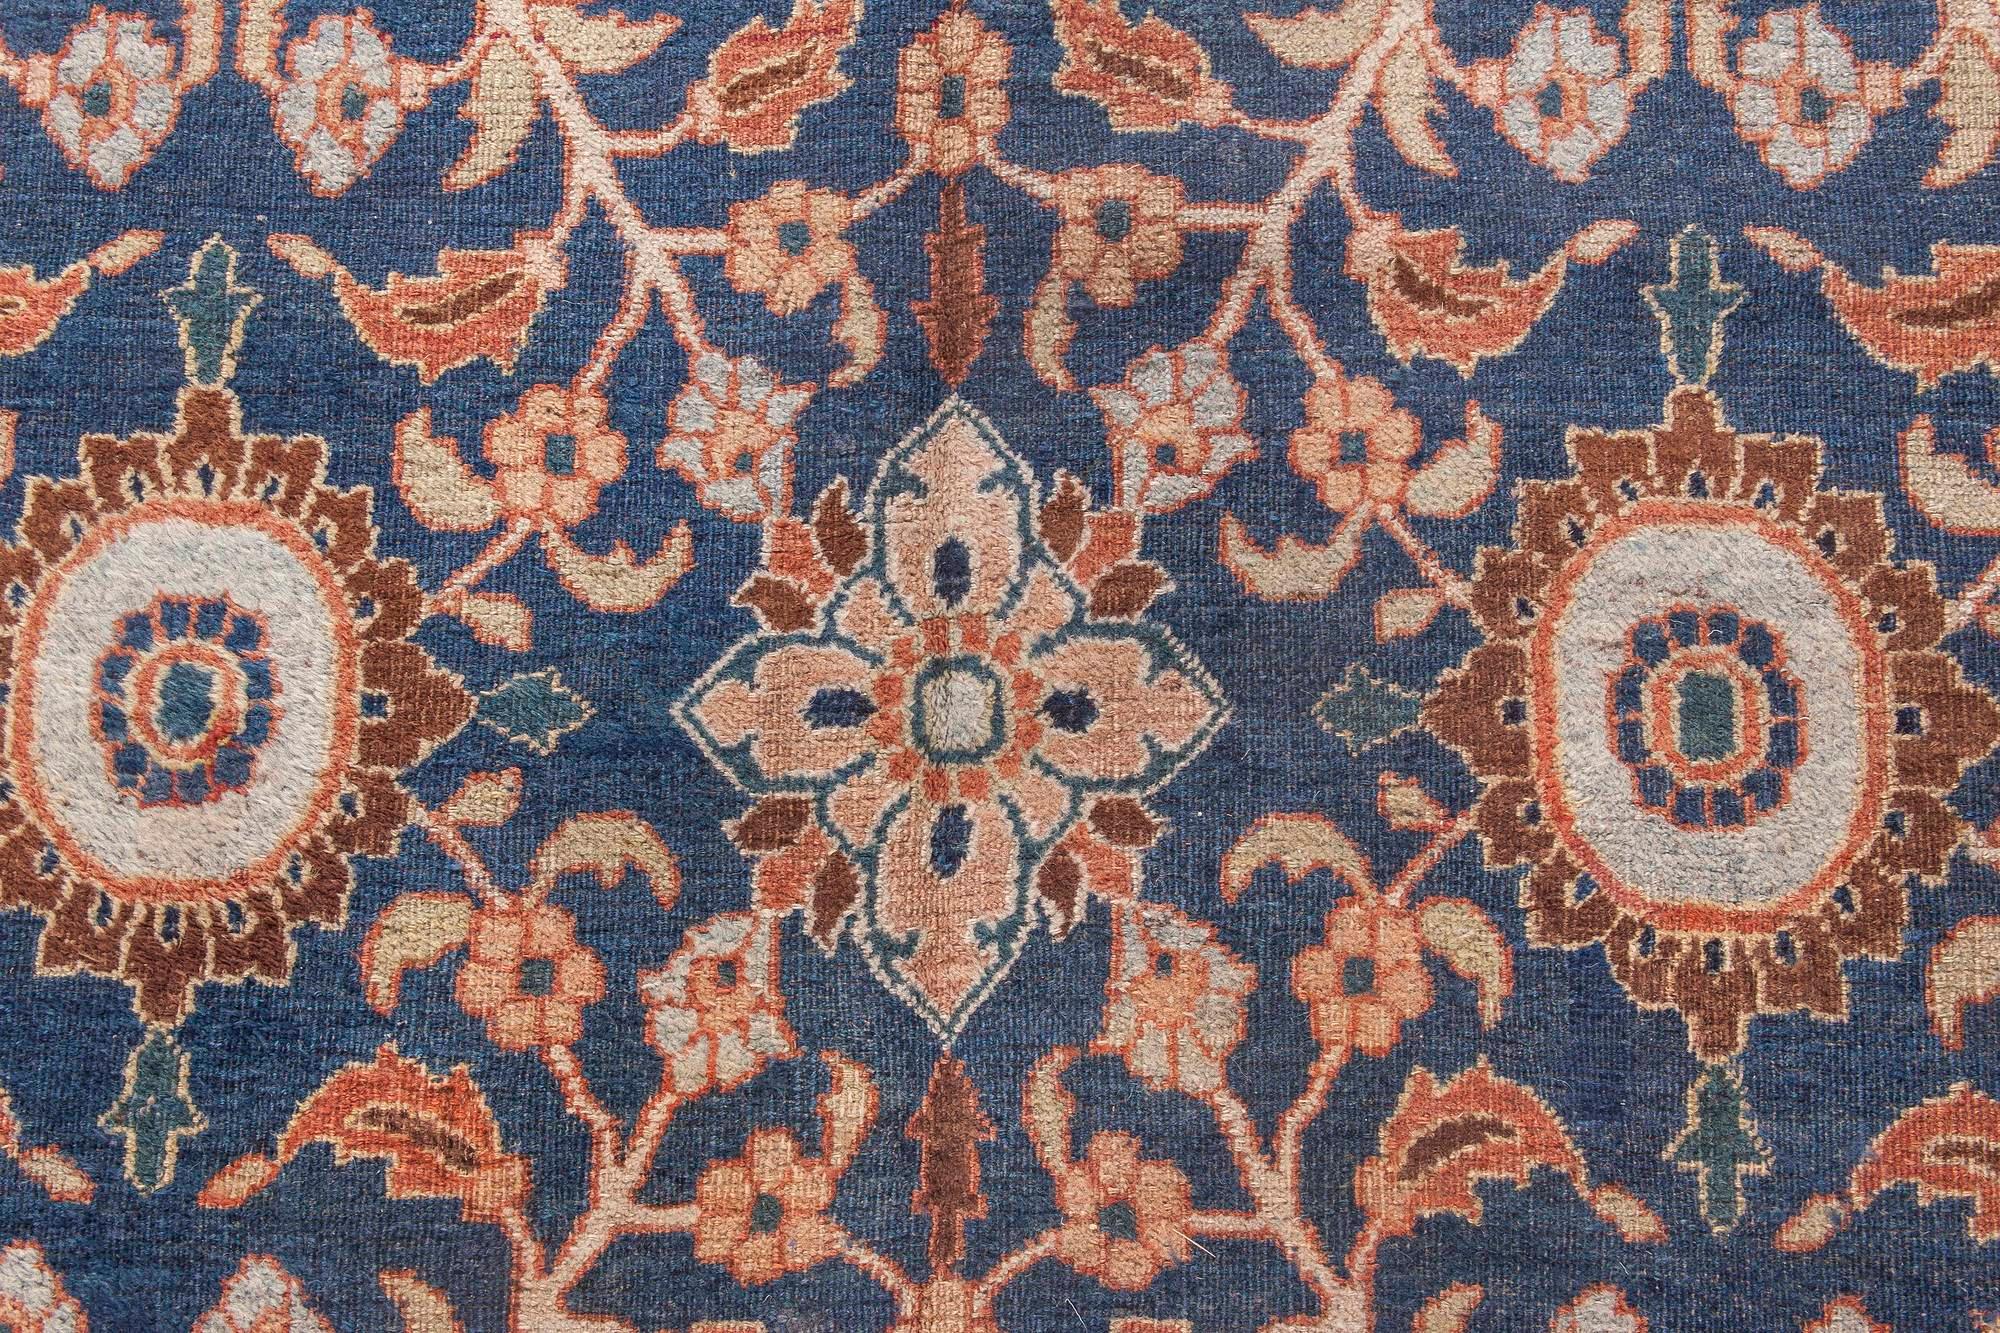 19th century botanic Persian Meshad caramel and navy blue handwoven wool rug
Size: 6'2